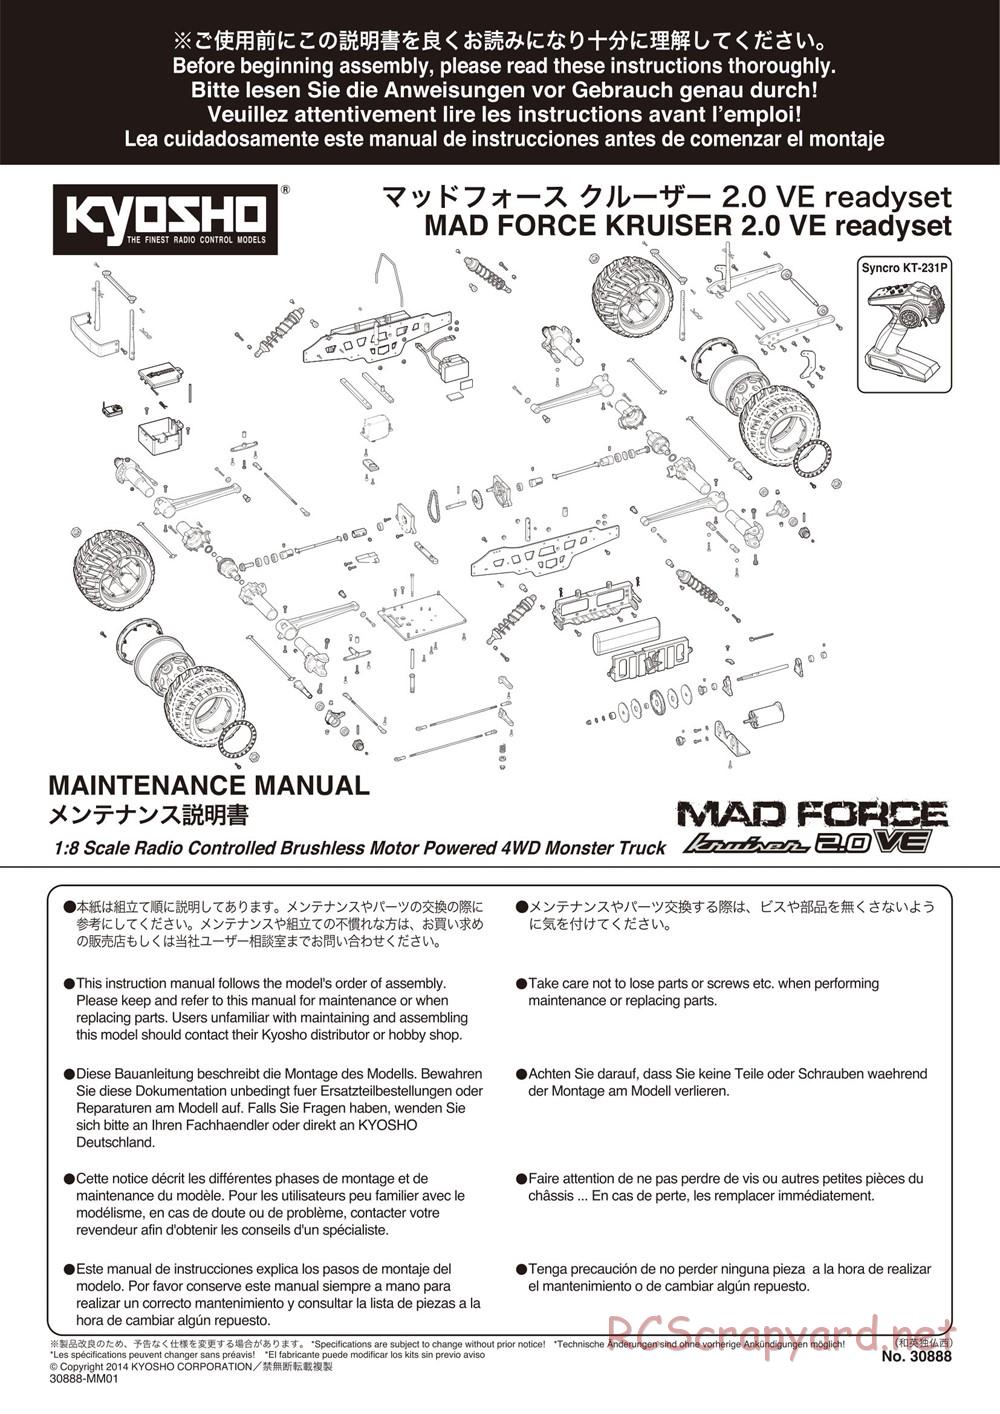 Kyosho - Mad Force Kruiser 2.0 VE - Manual - Page 1